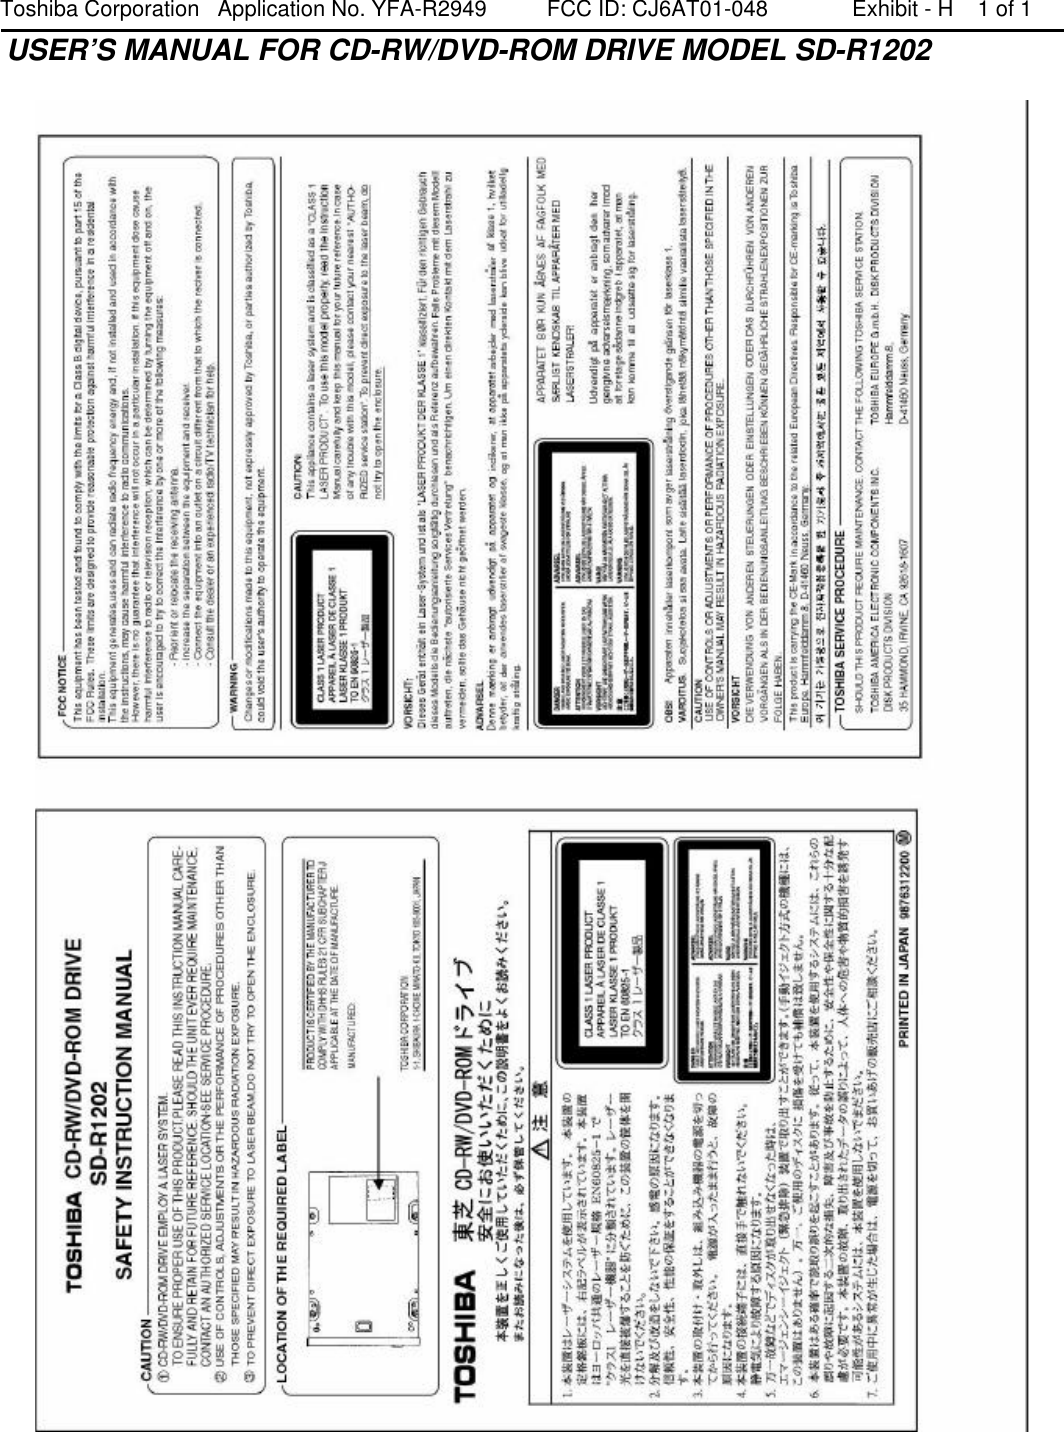 Toshiba Corporation   Application No. YFA-R2949          FCC ID: CJ6AT01-048              Exhibit - H    1 of 1 USER’S MANUAL FOR CD-RW/DVD-ROM DRIVE MODEL SD-R1202